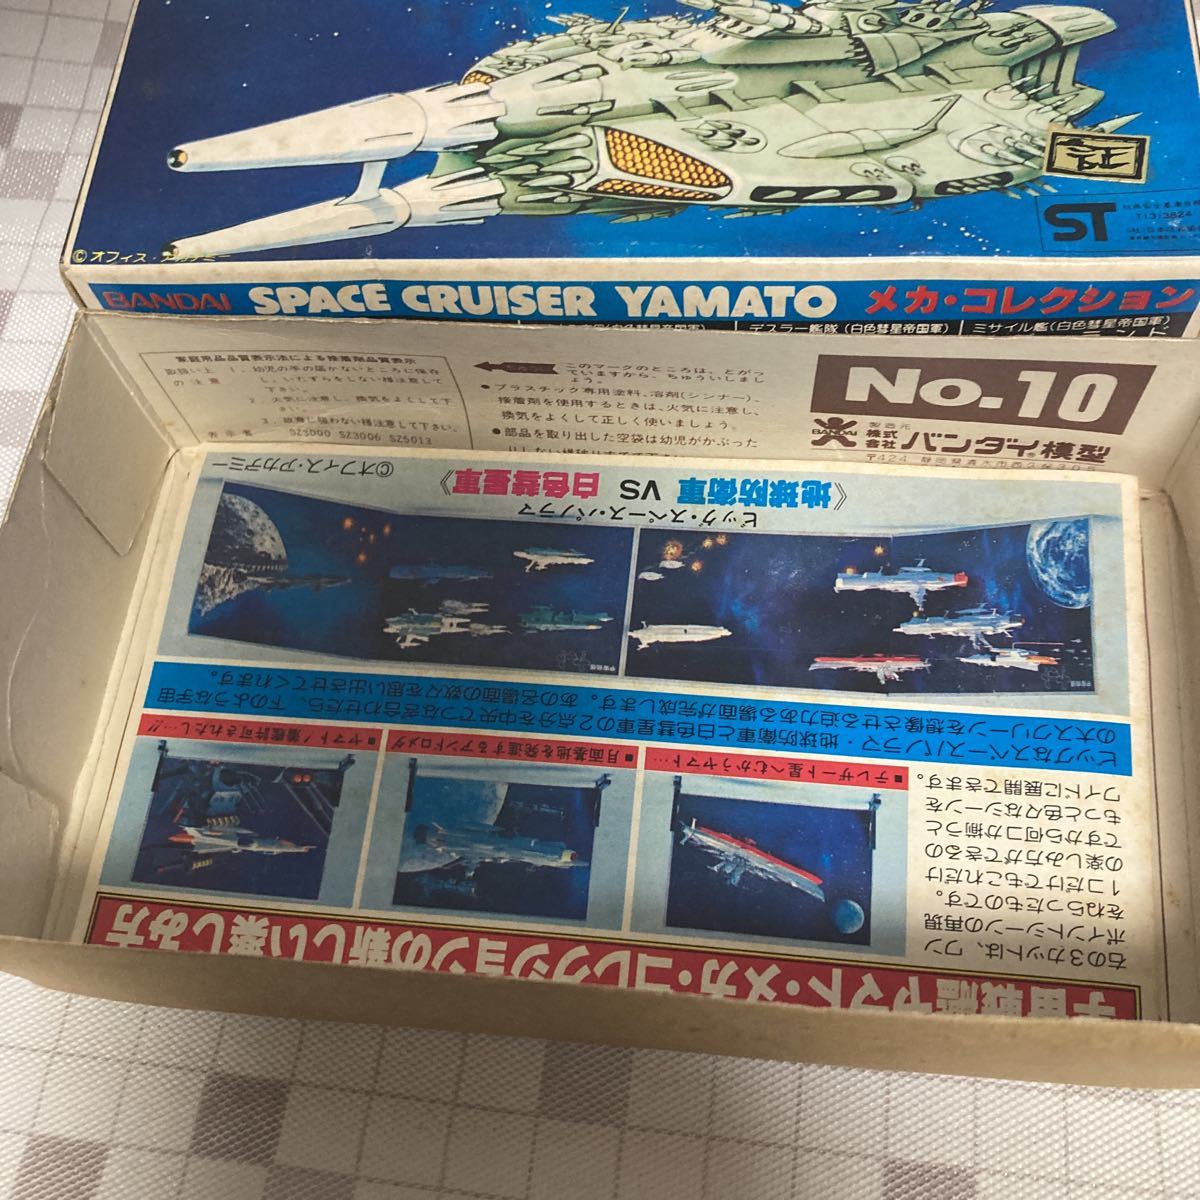 snn that time thing van The i Mark Showa Retro old kit old Bandai mechanism collection Uchu Senkan Yamato series NO.10go- Land 